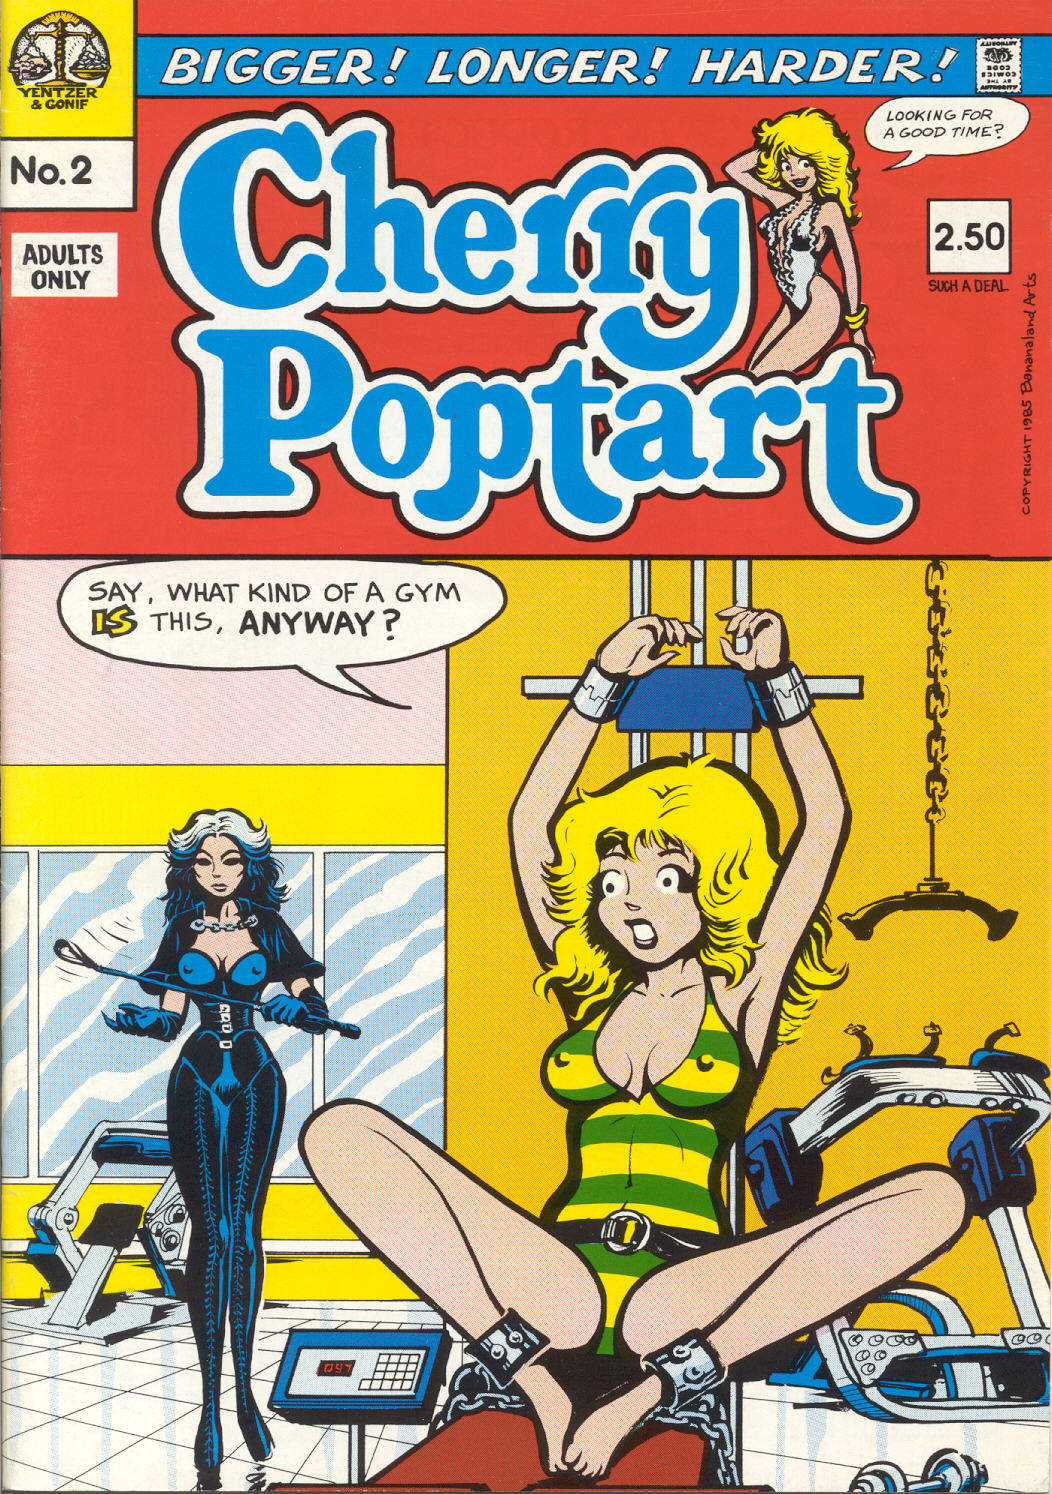 [Larry Welz] Cherry Poptart #2 